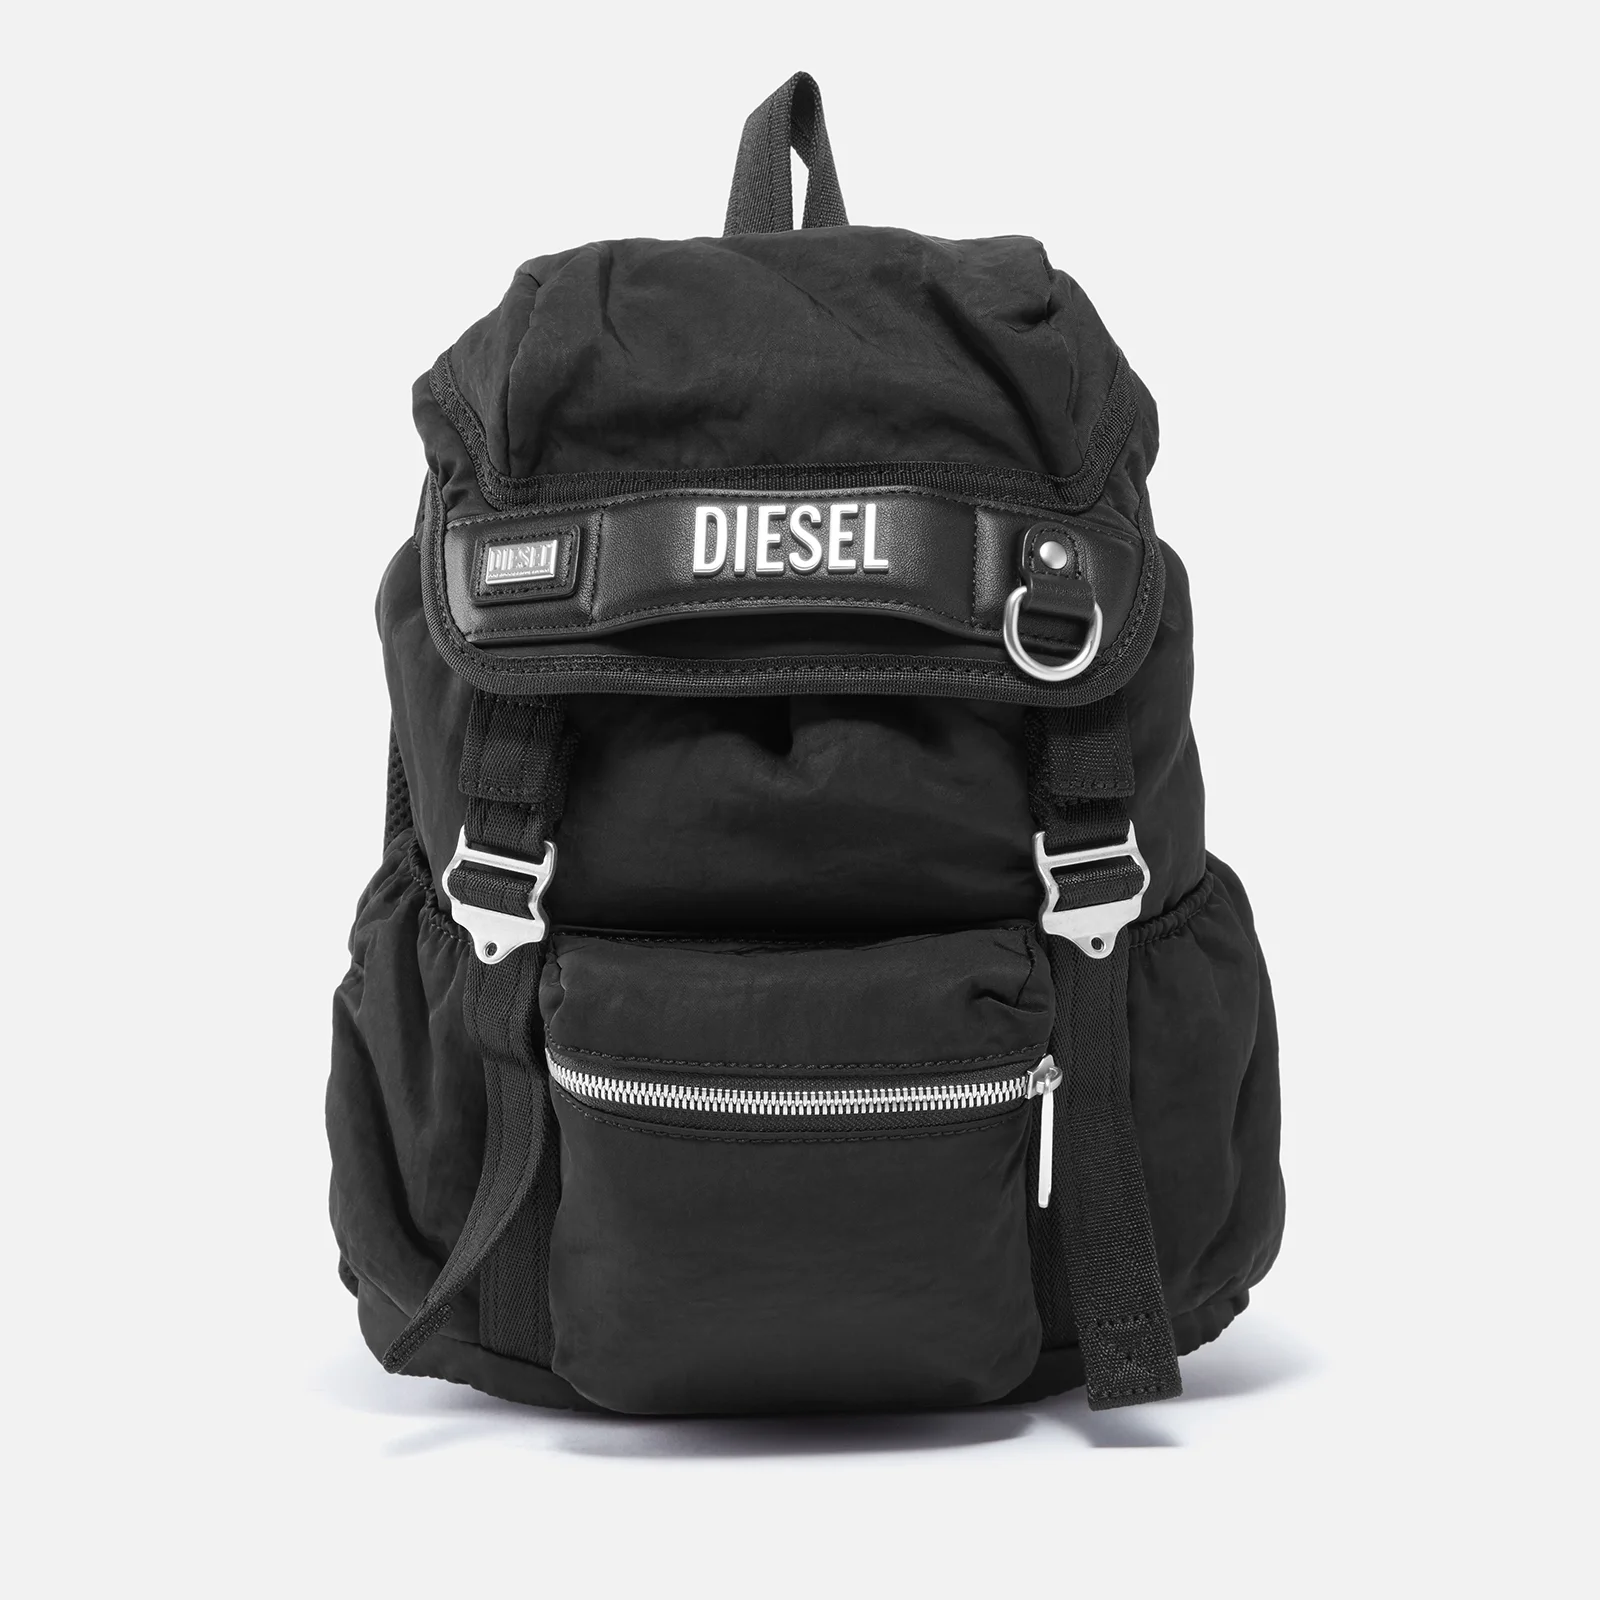 Diesel Logo Shell Backpack Image 1